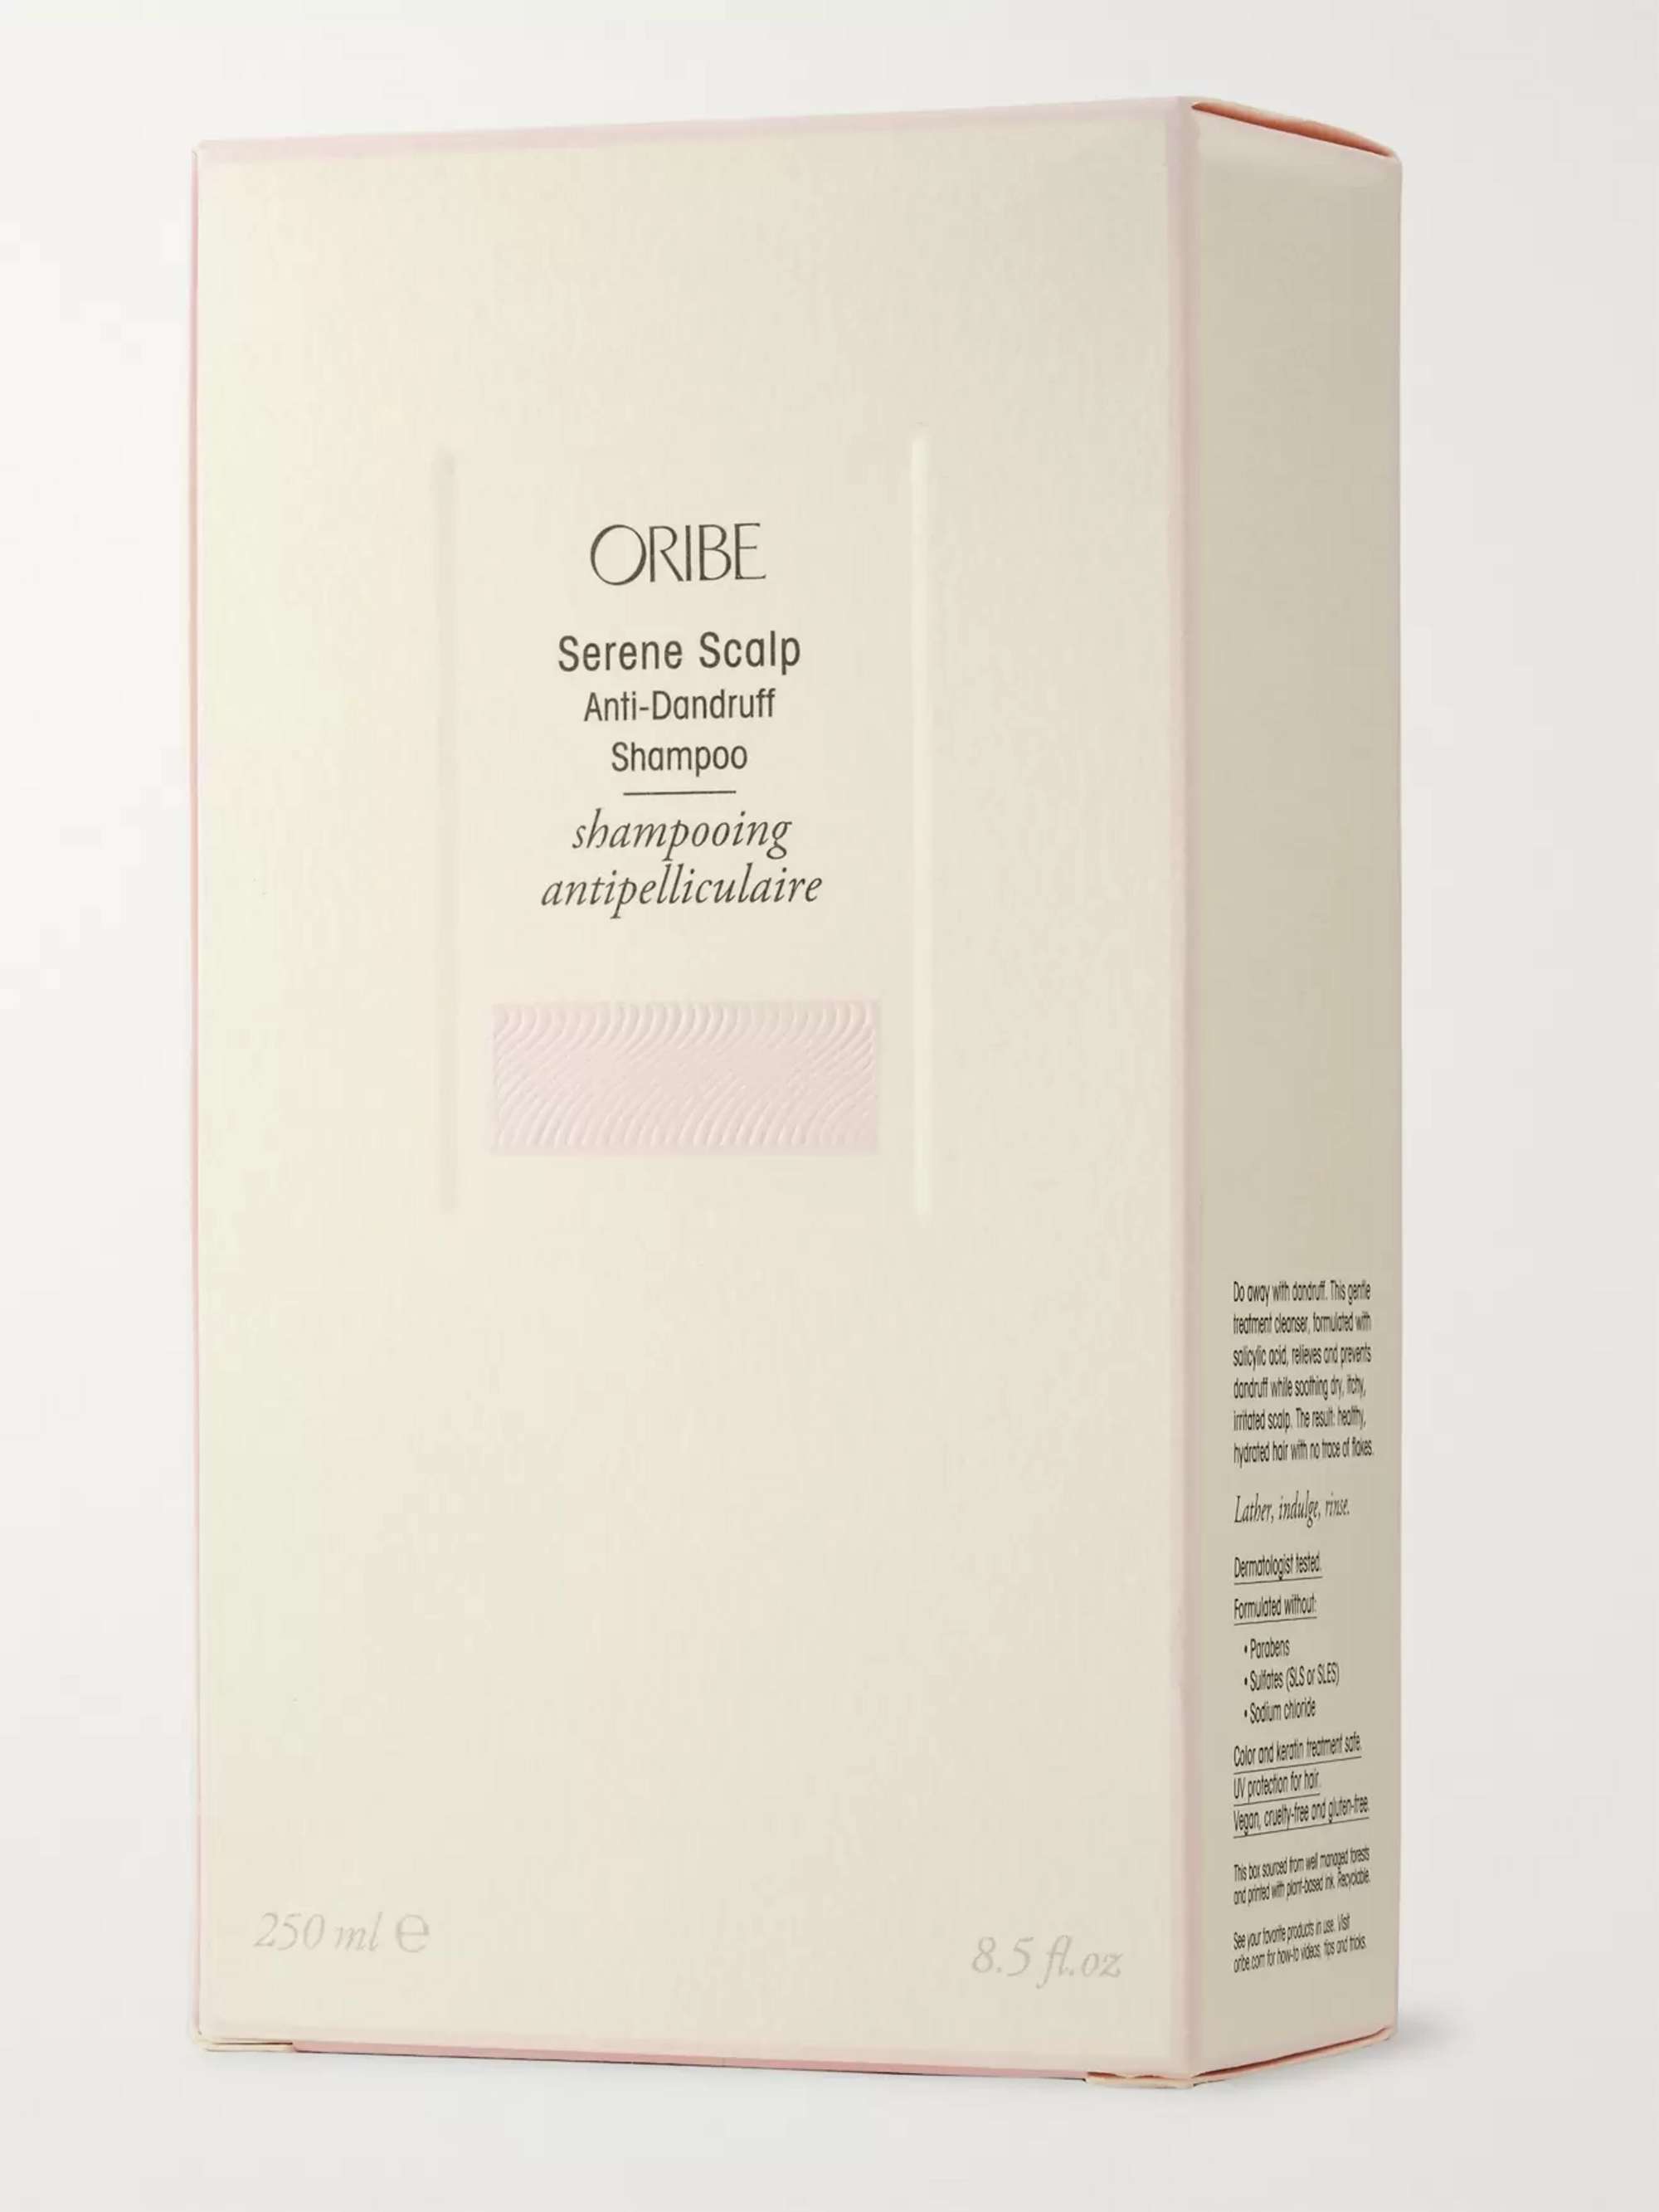 ORIBE Serene Scalp Anti-Dandruff Shampoo, 250ml